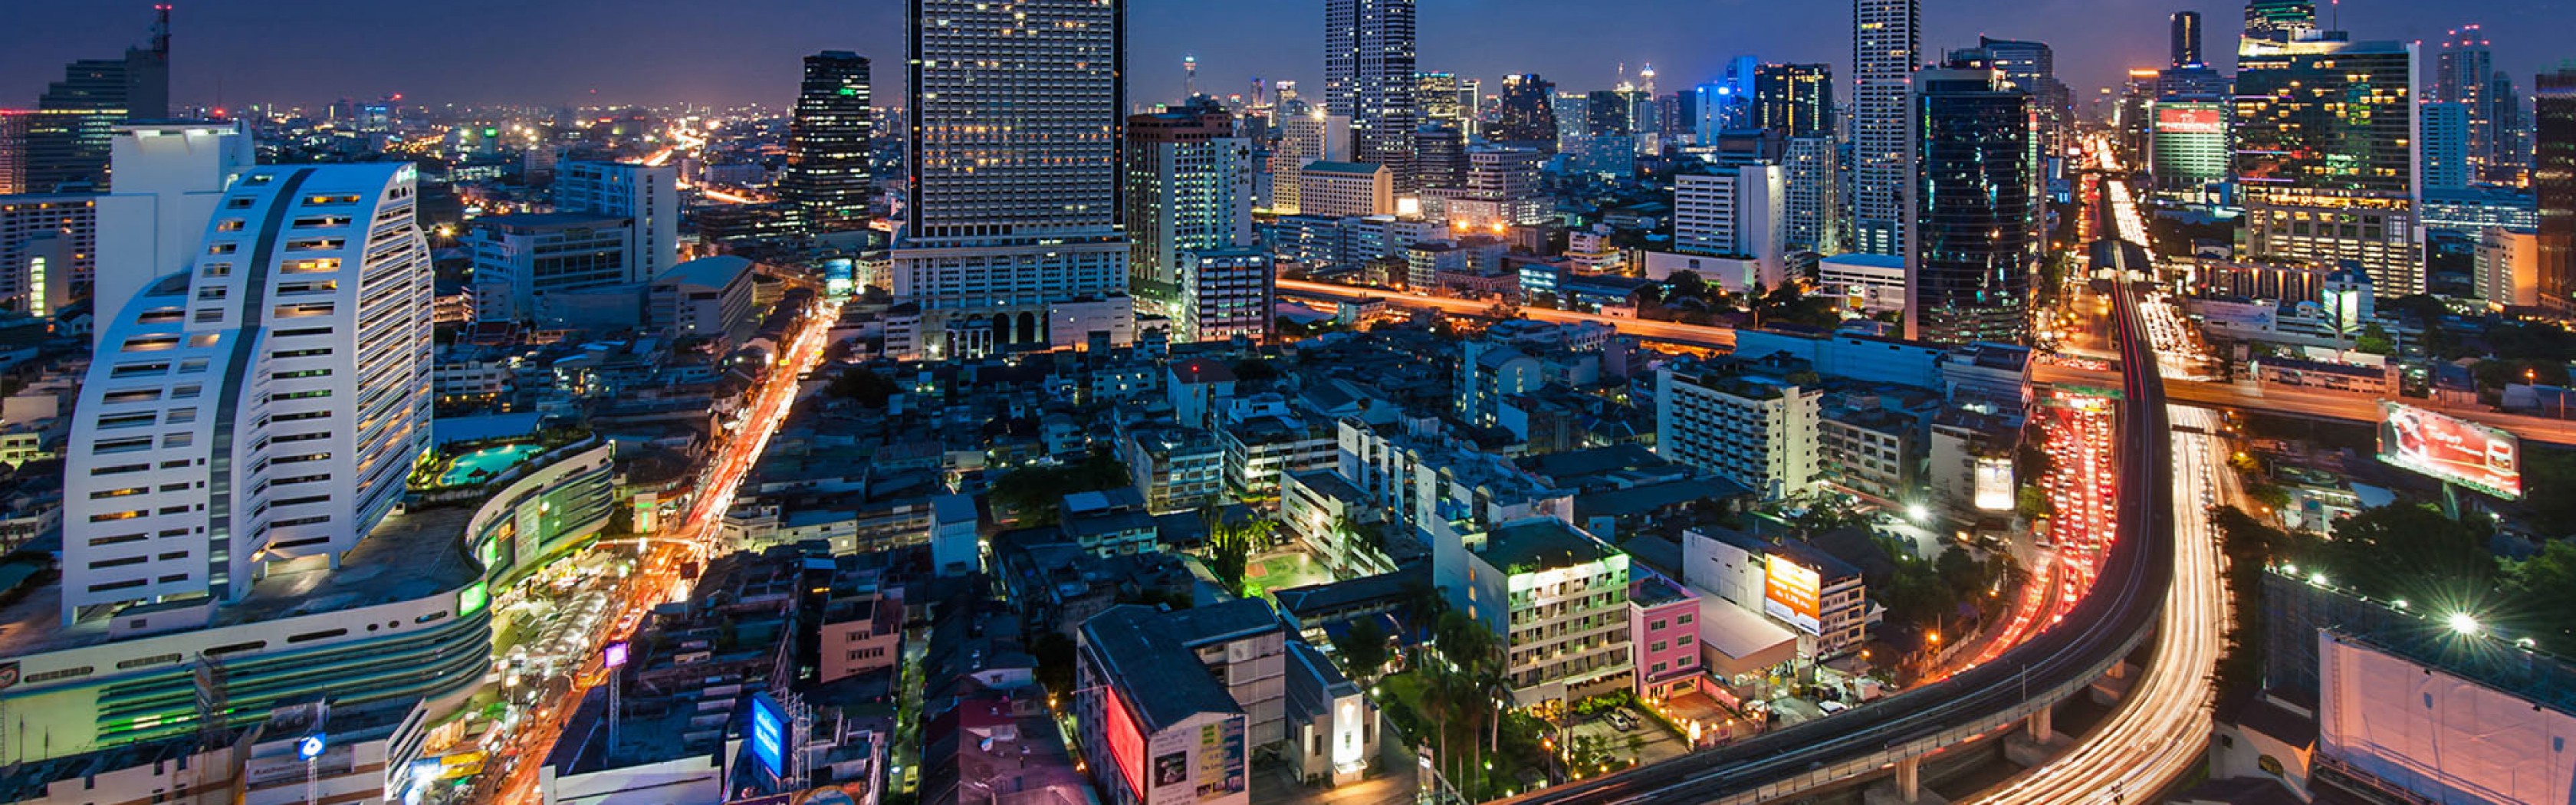 Bangkok thailand 3360x1050